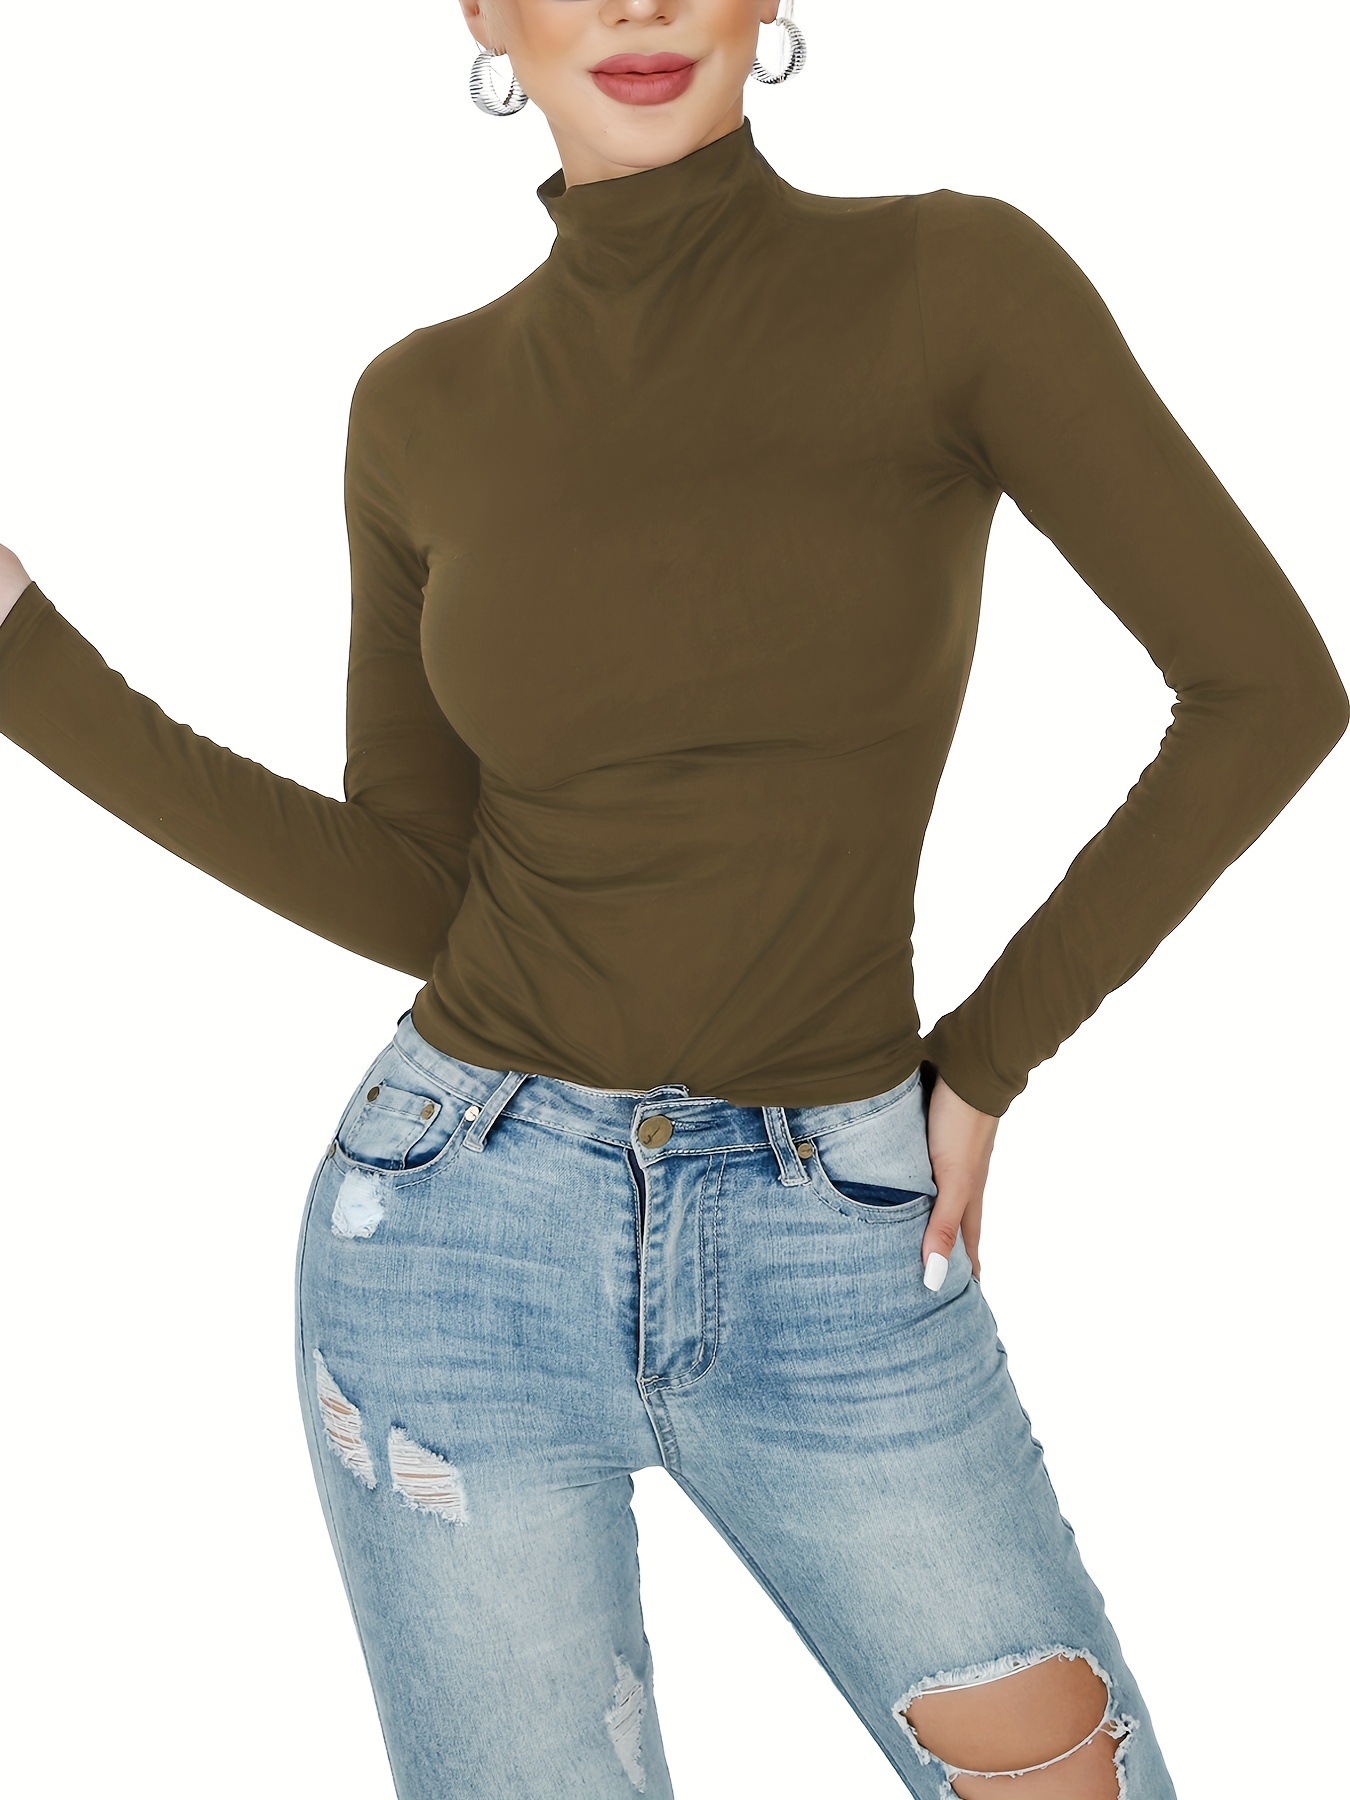 Womens Mock Turtleneck T Shirt Long Sleeve Solid Stretch Basic